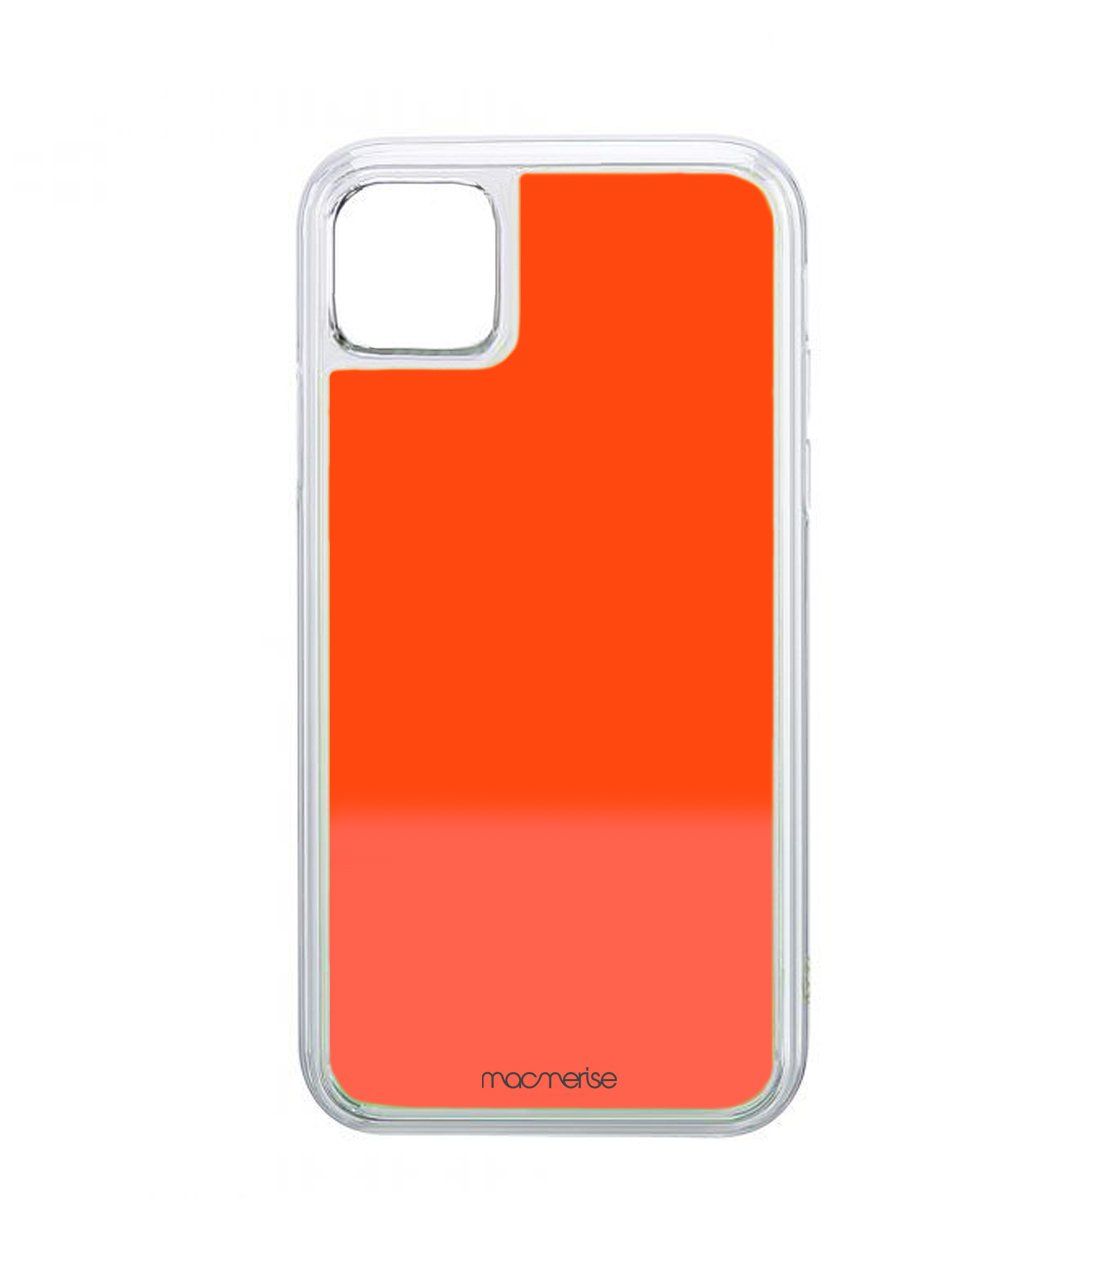 Neon Sand Orange - Neon Sand Phone Case for iPhone 11 Pro Max